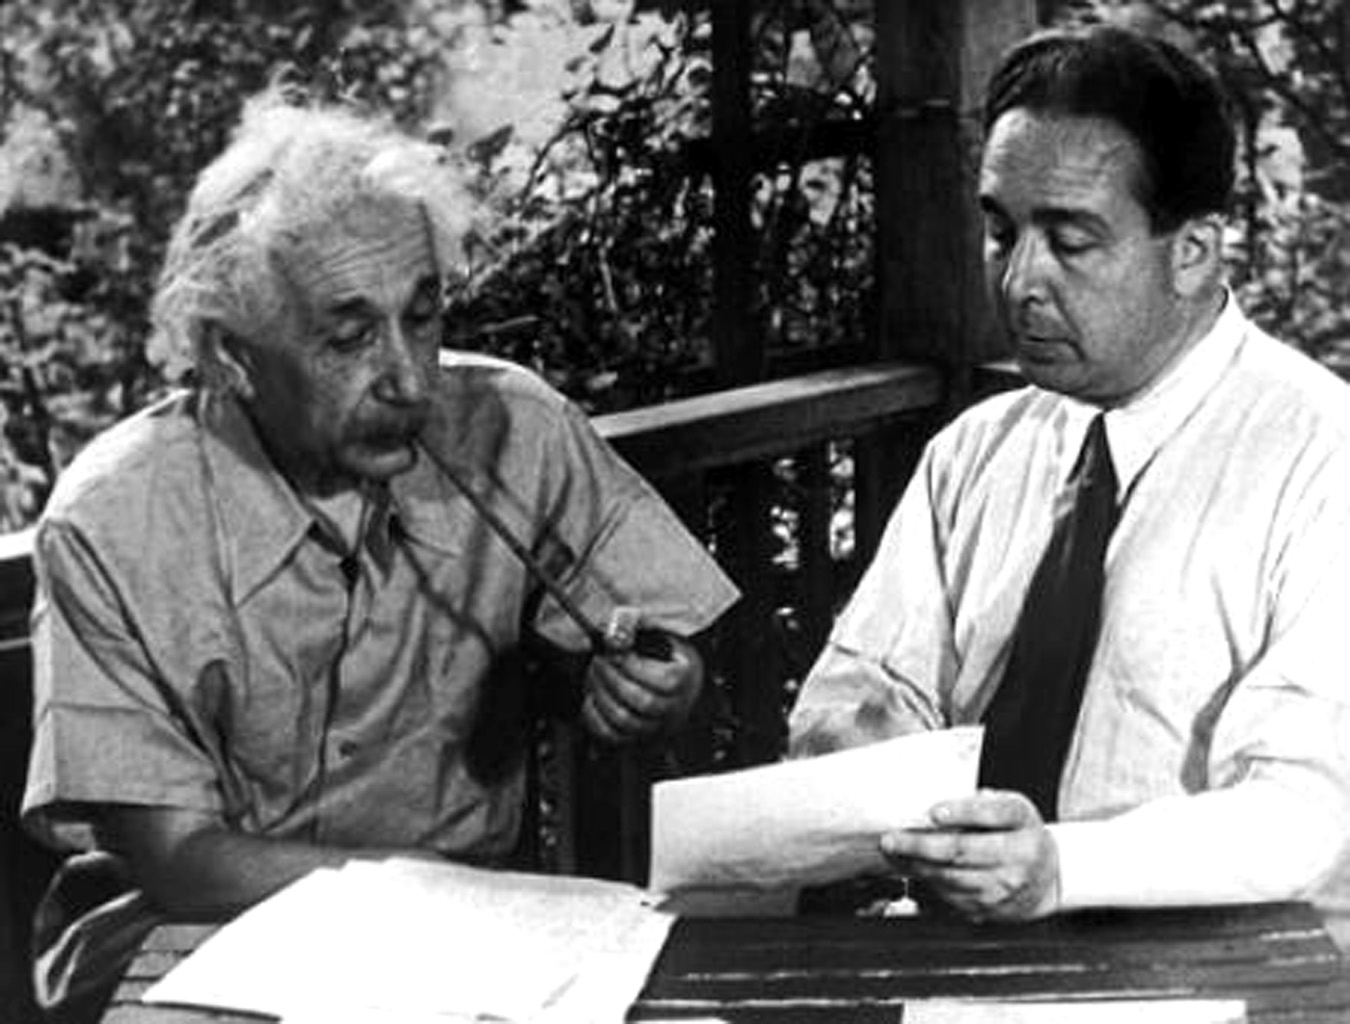 Albert Einstein and Leo Szilard working on the famous letter